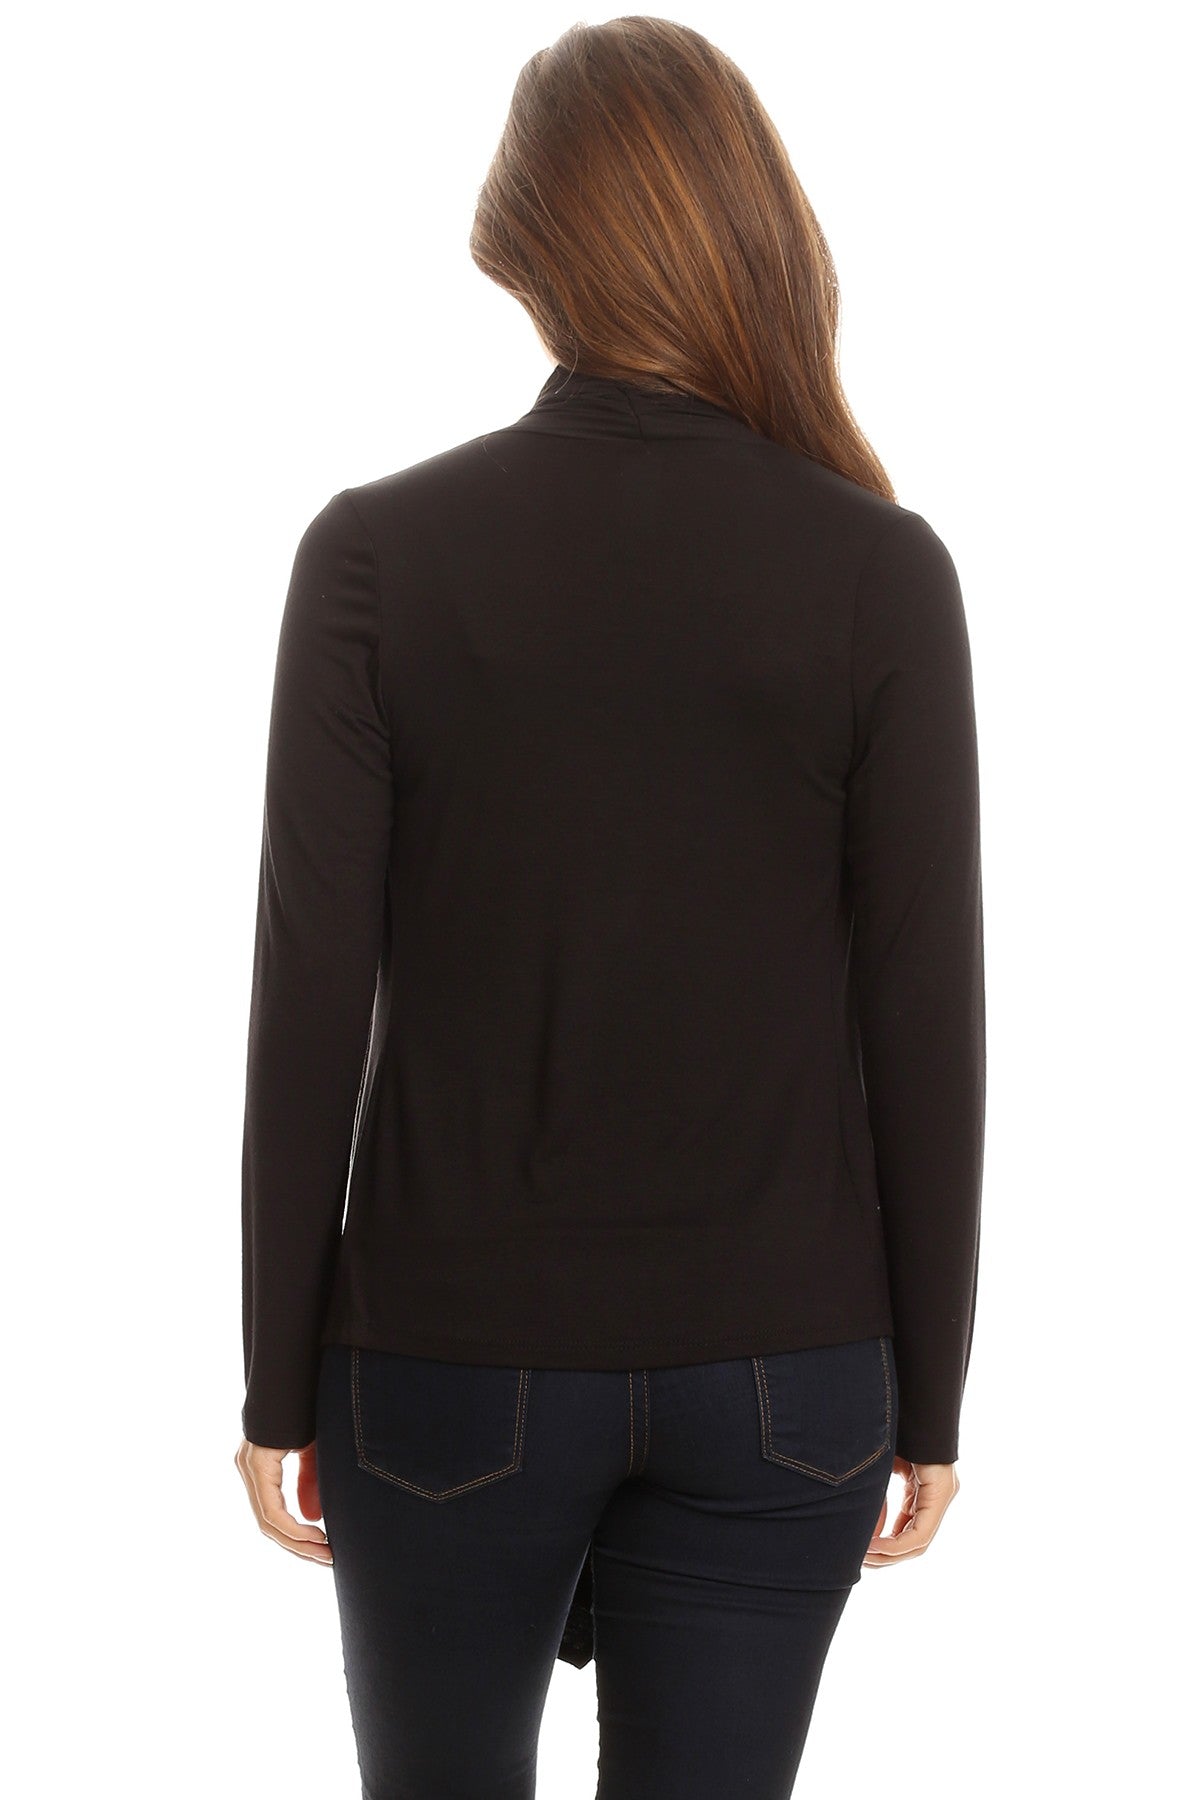 Women's Casual Solid Long Sleeve Drape Open Front Cardigan - FashionJOA